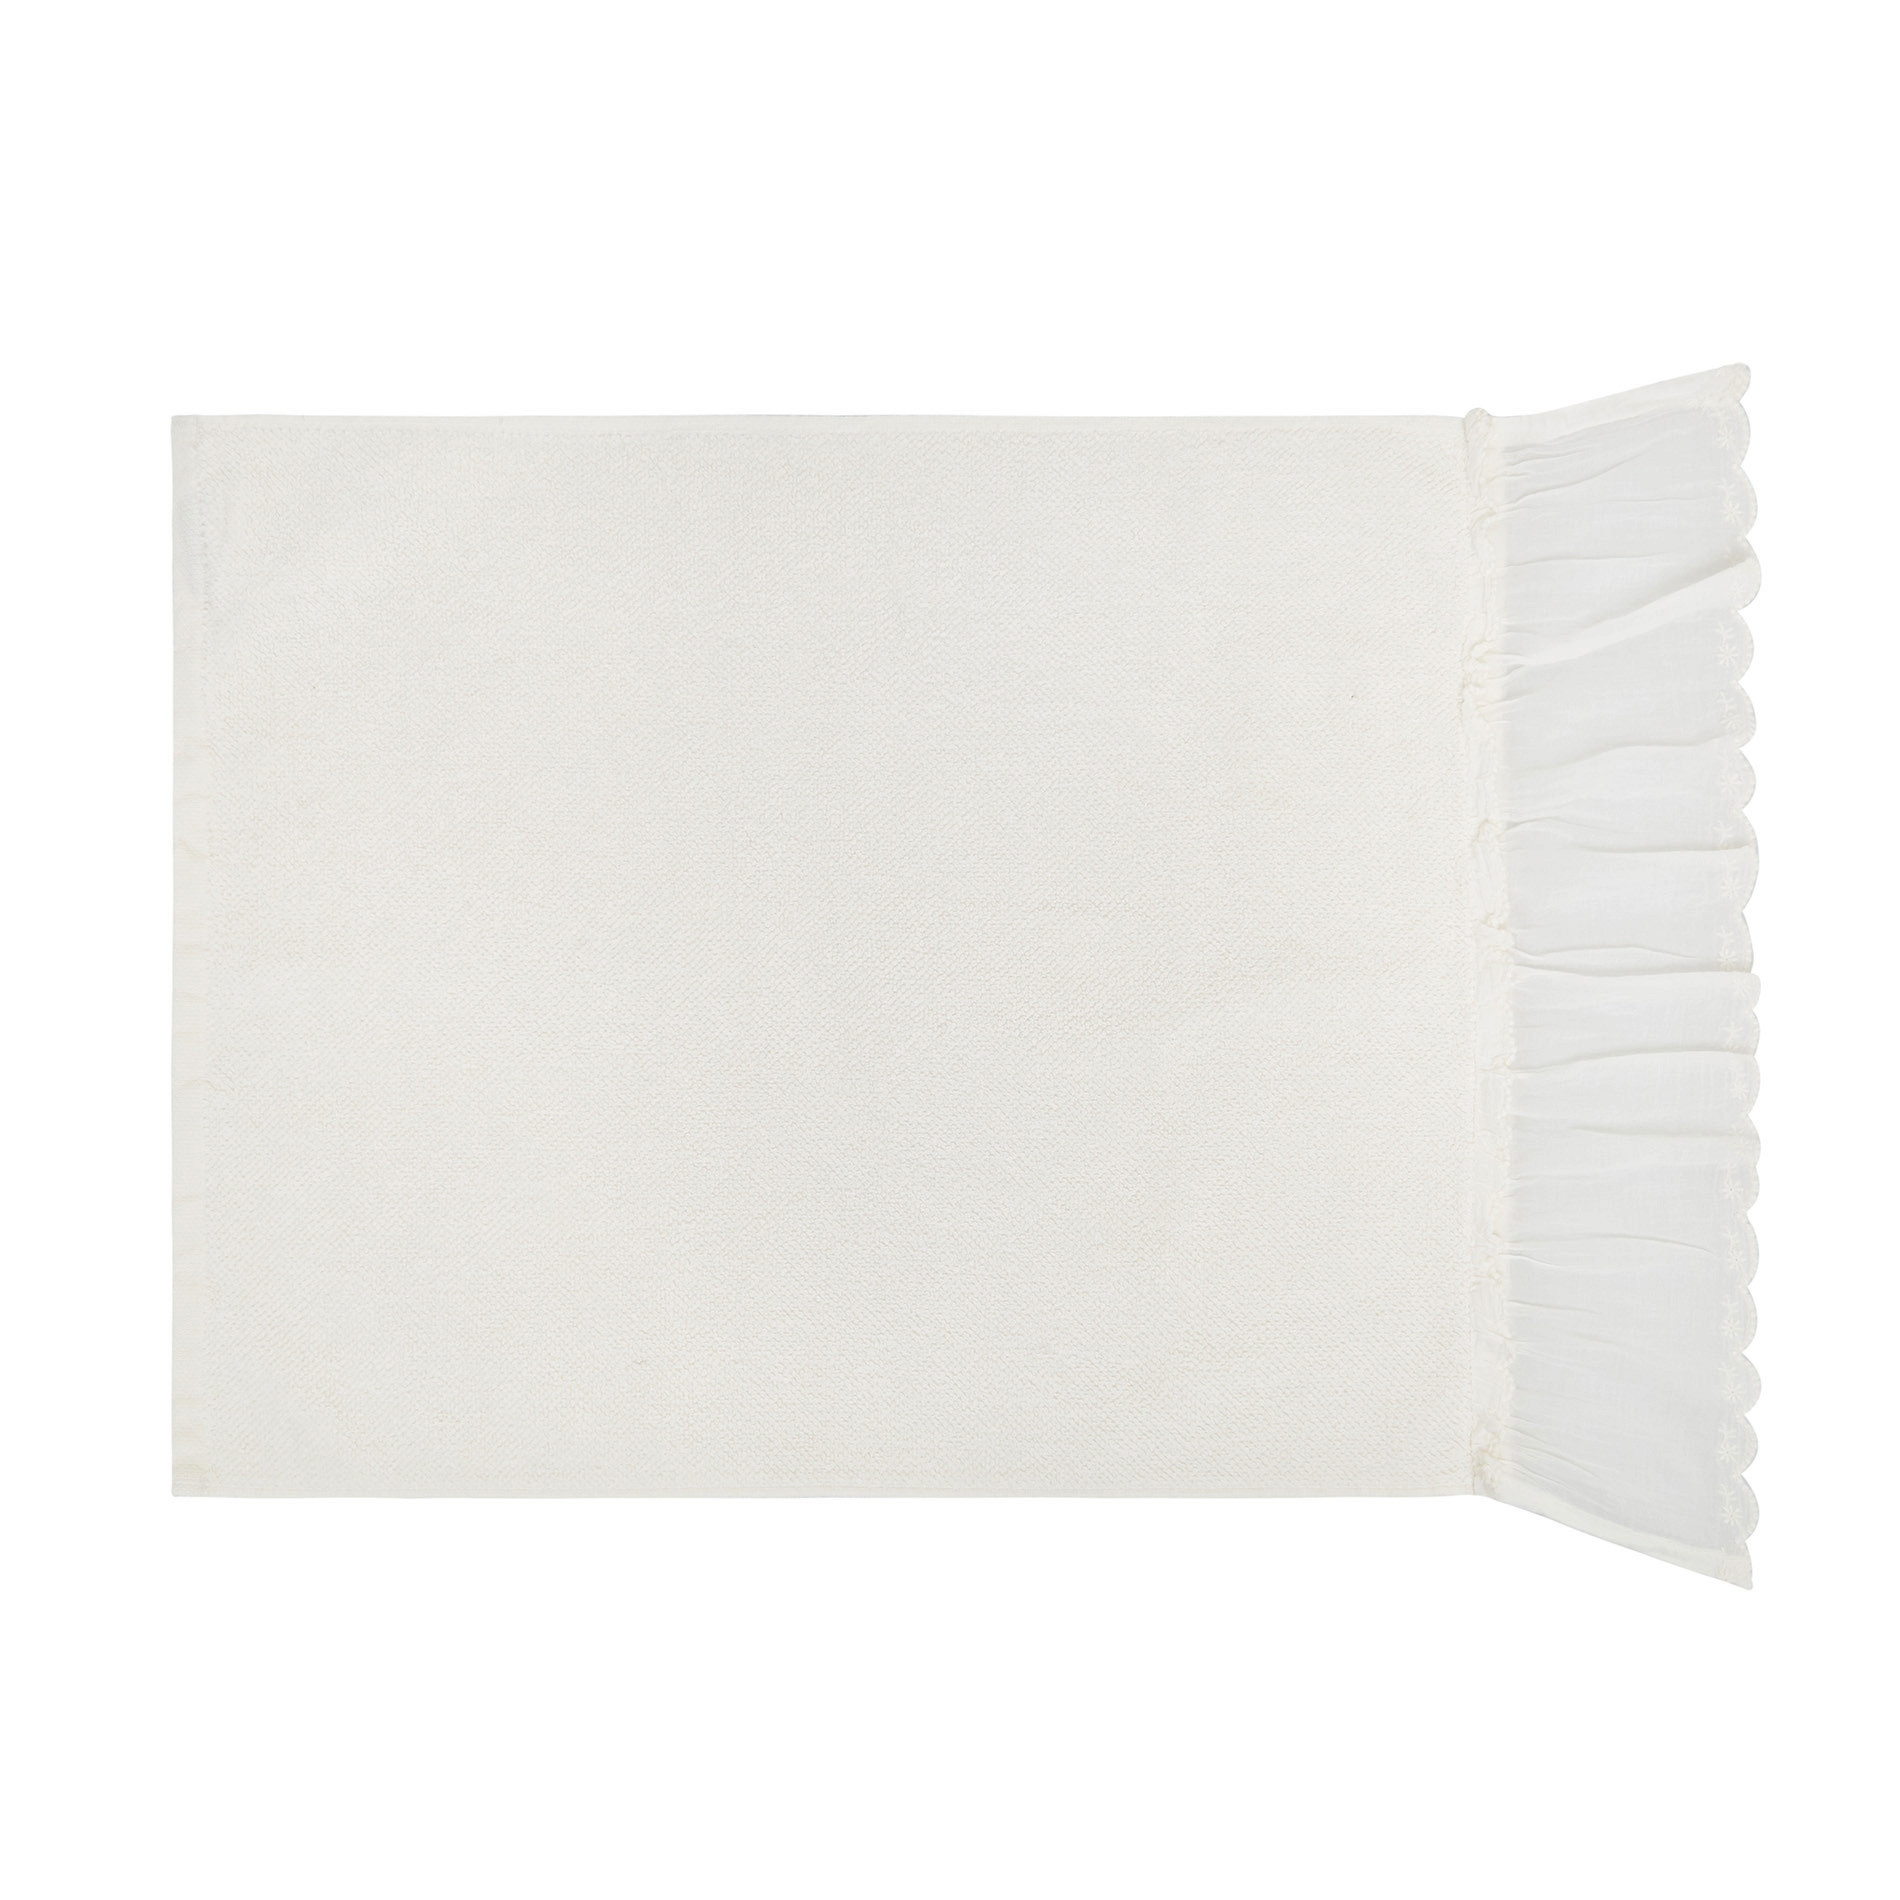 Portofino cotton towel with voile edge, White Cream, large image number 1